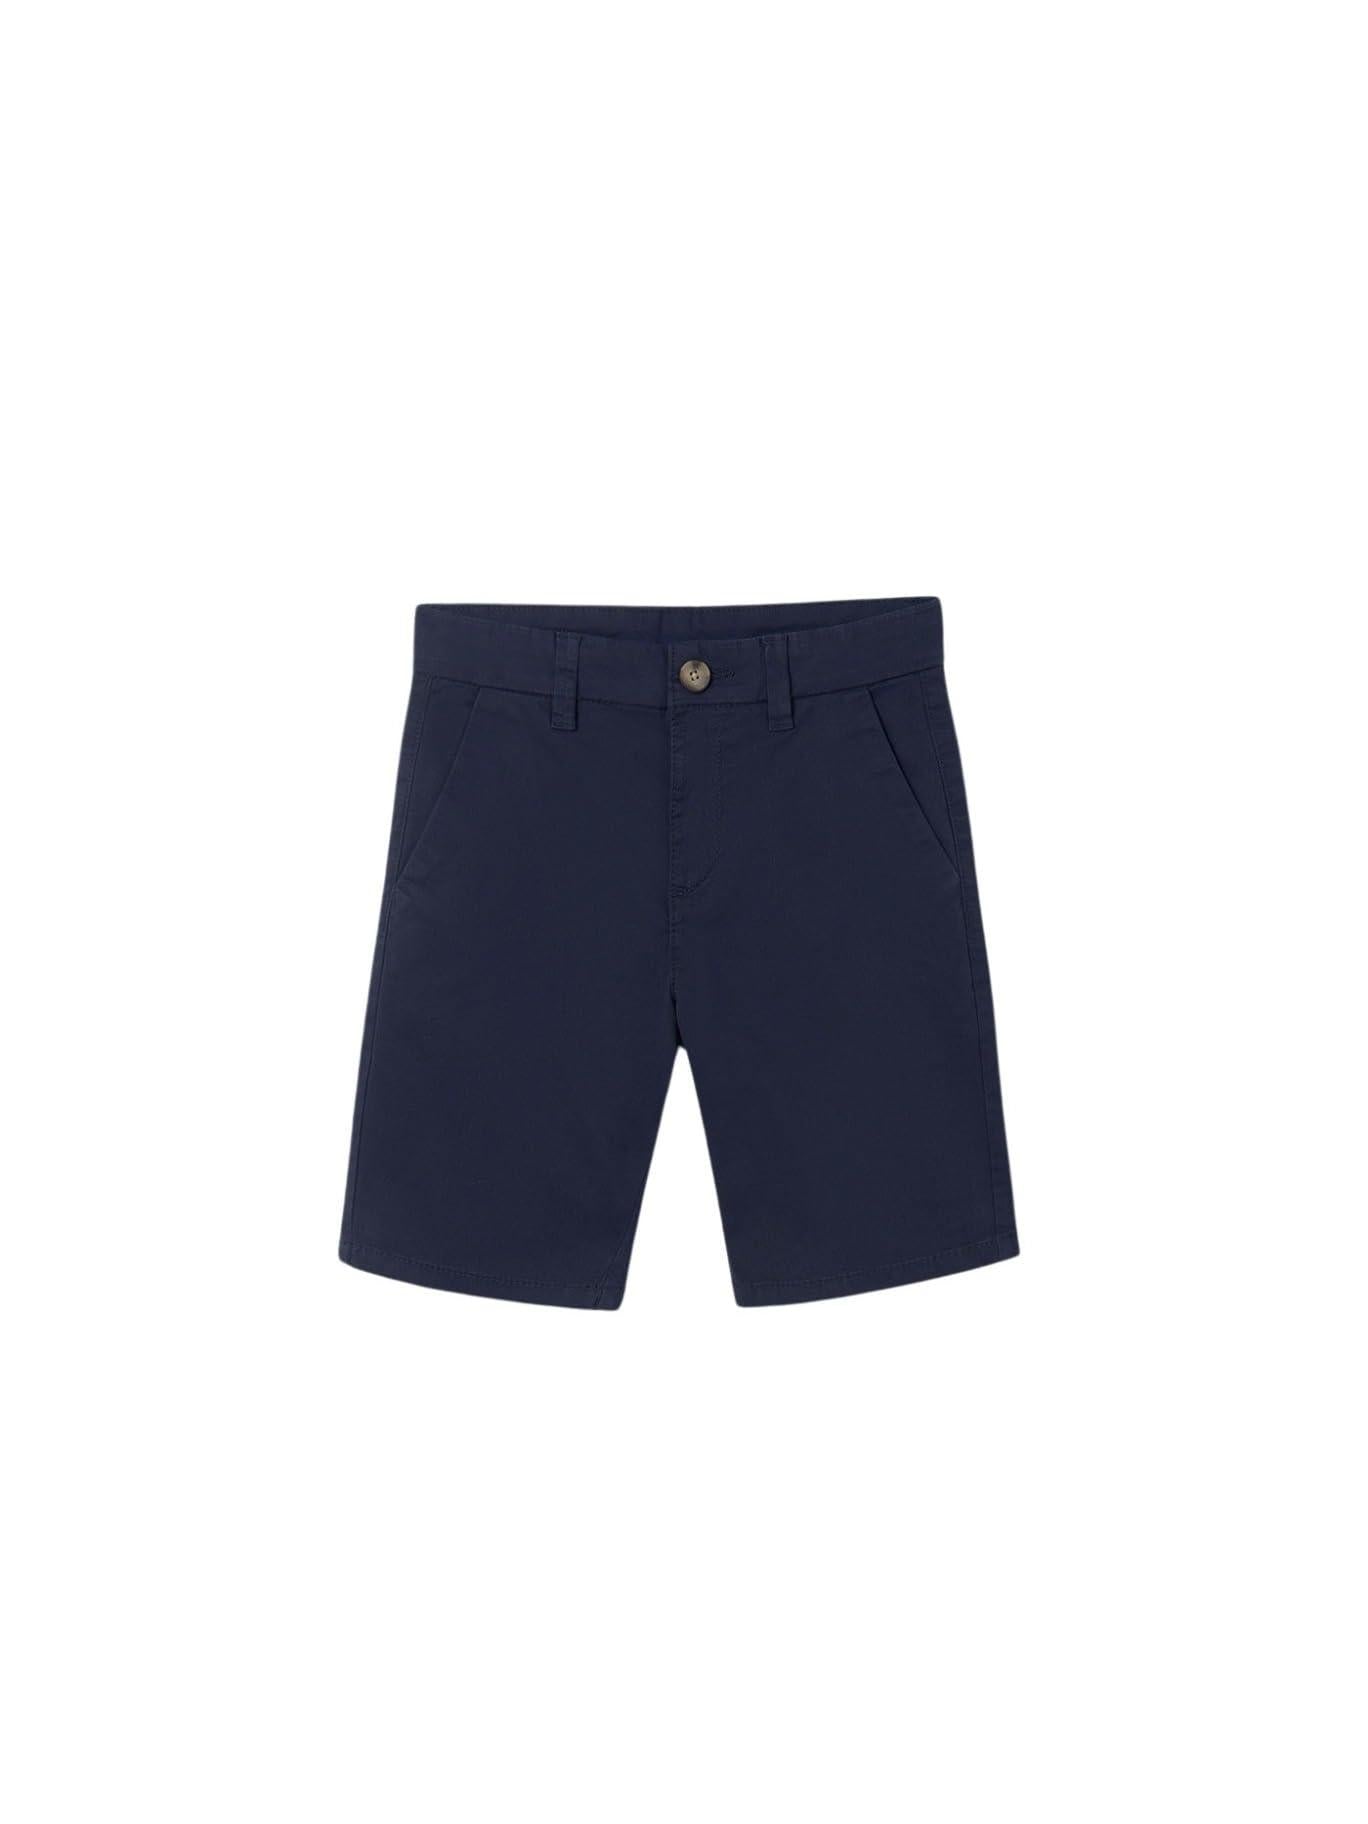 Mayoral Basic Chino Shorts for Boys Navy 8 Years (128cm)